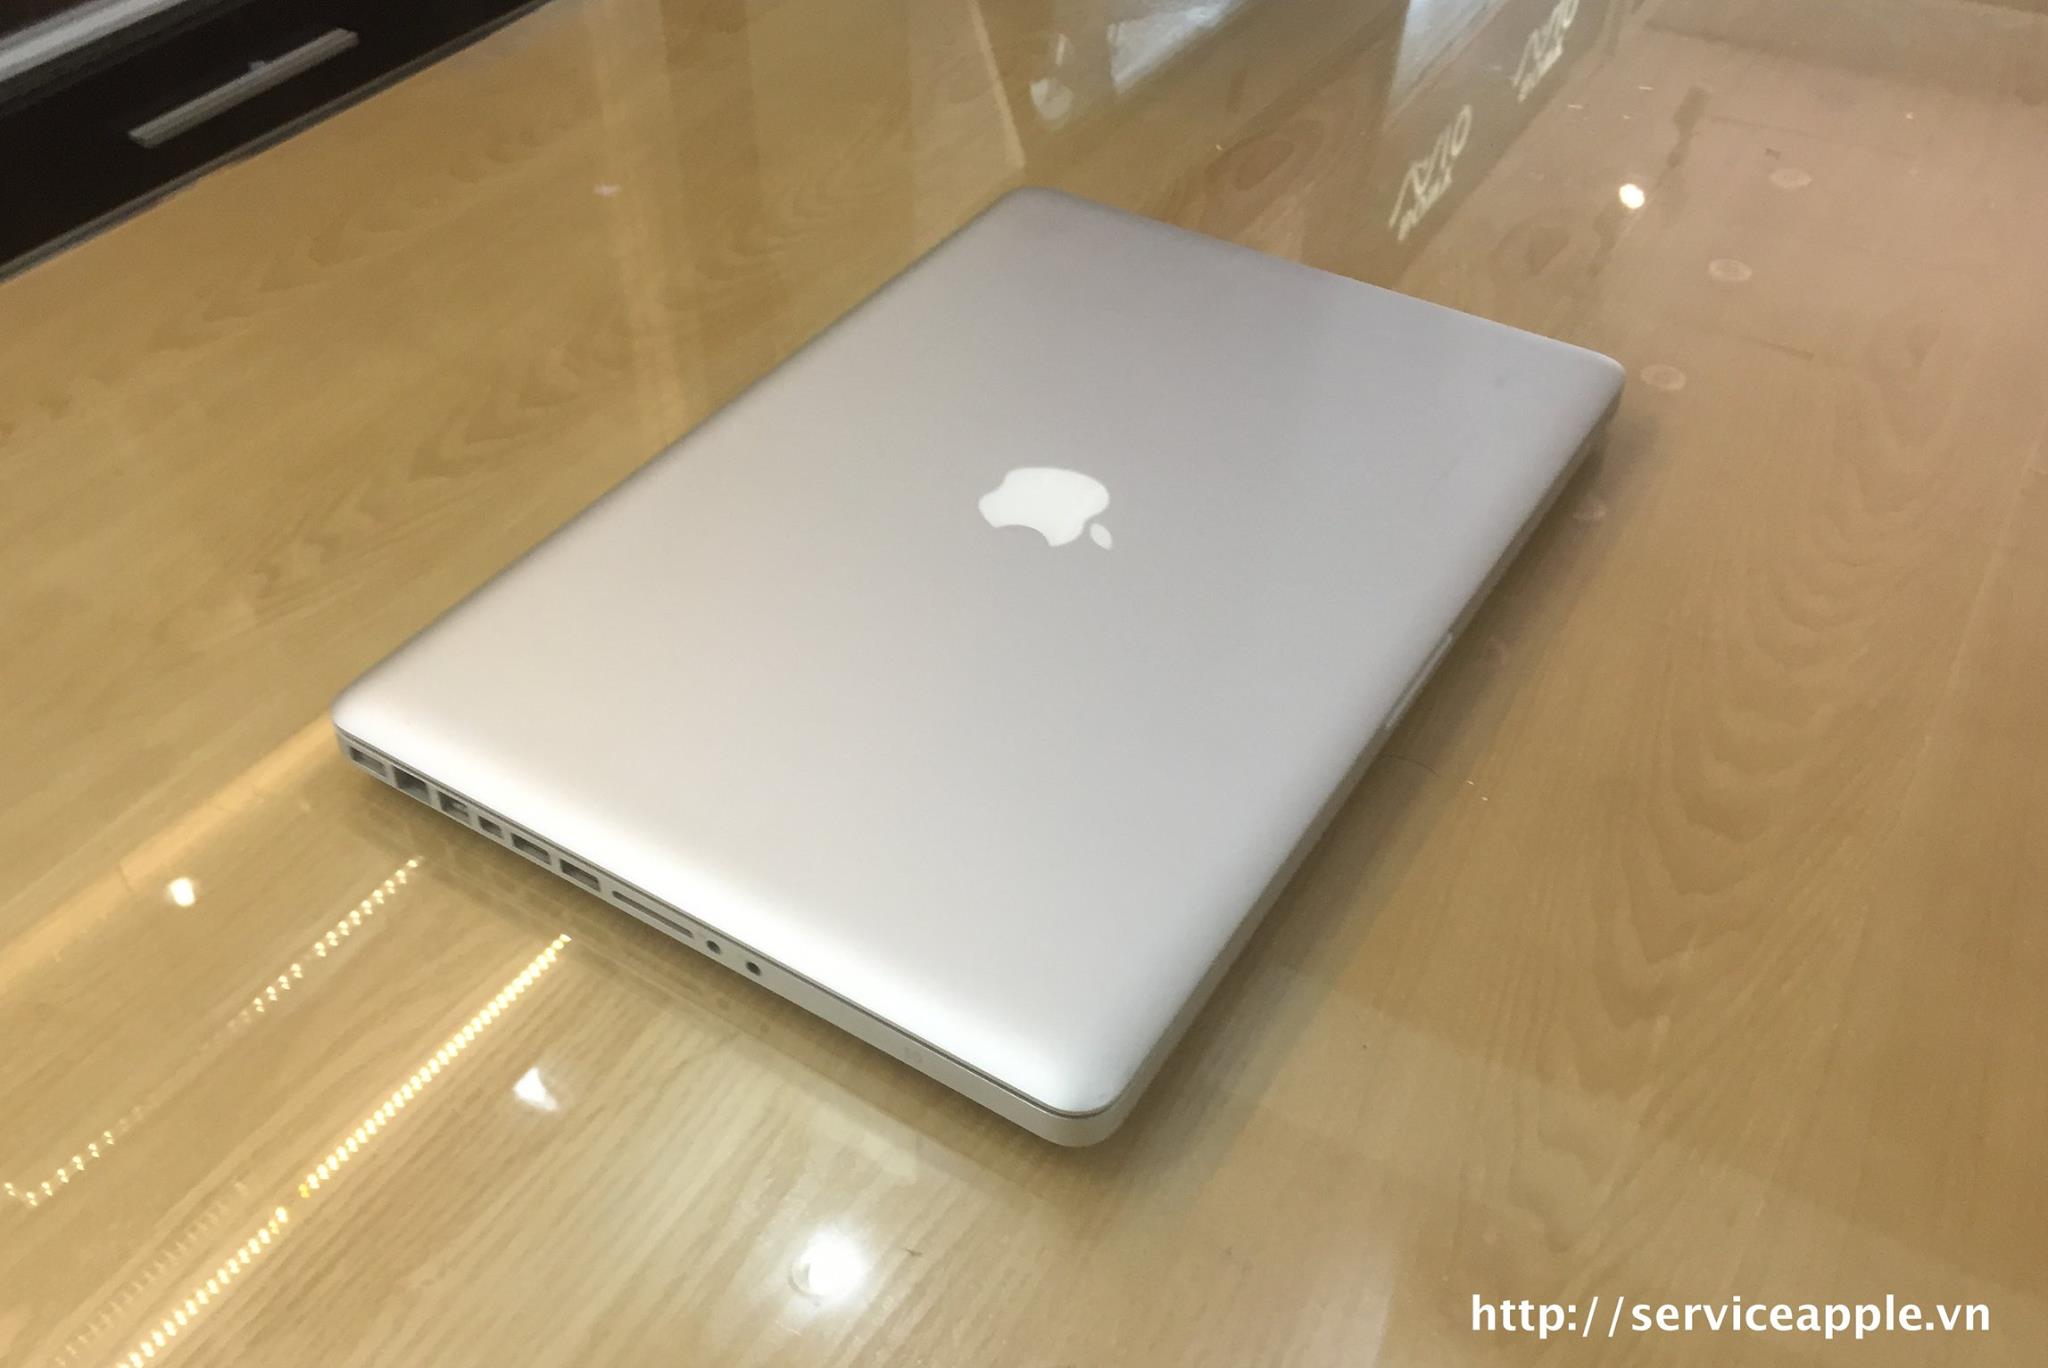  MacBook Pro MD103 Full Option _3.jpg